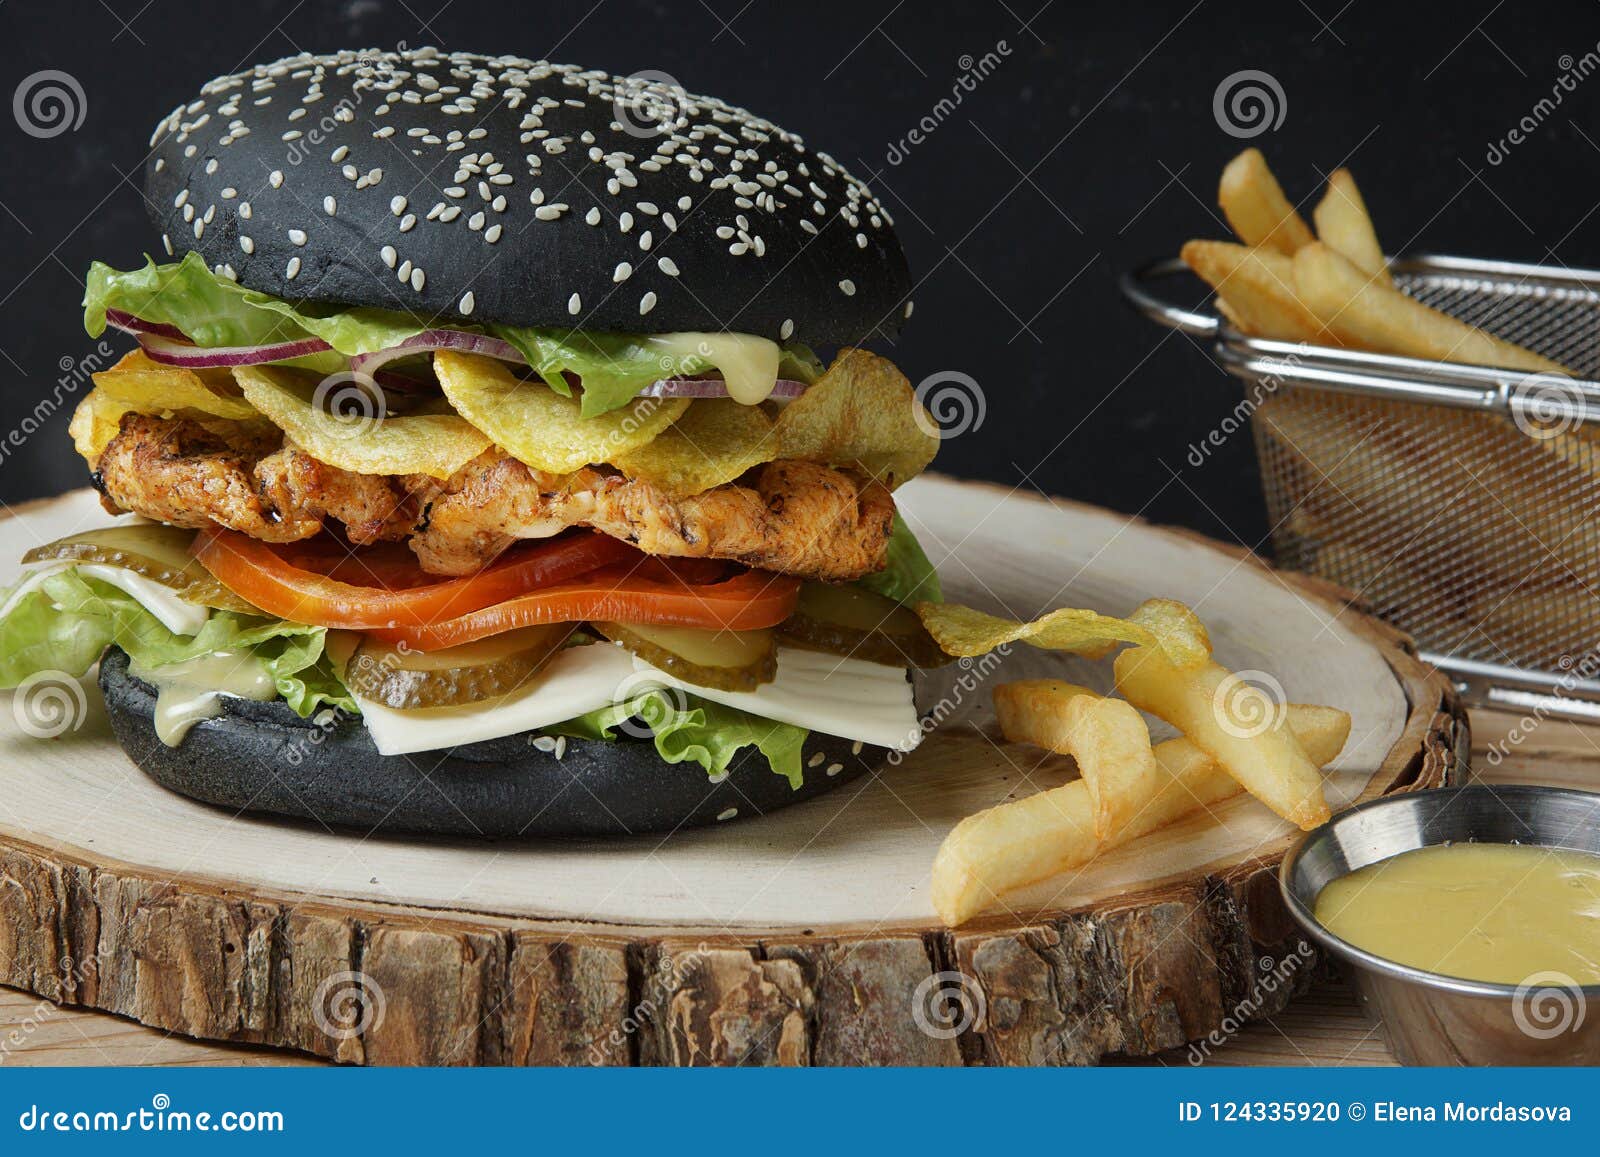 A Cool  Burger  With A Black Bun Sesame Seeds Inside 